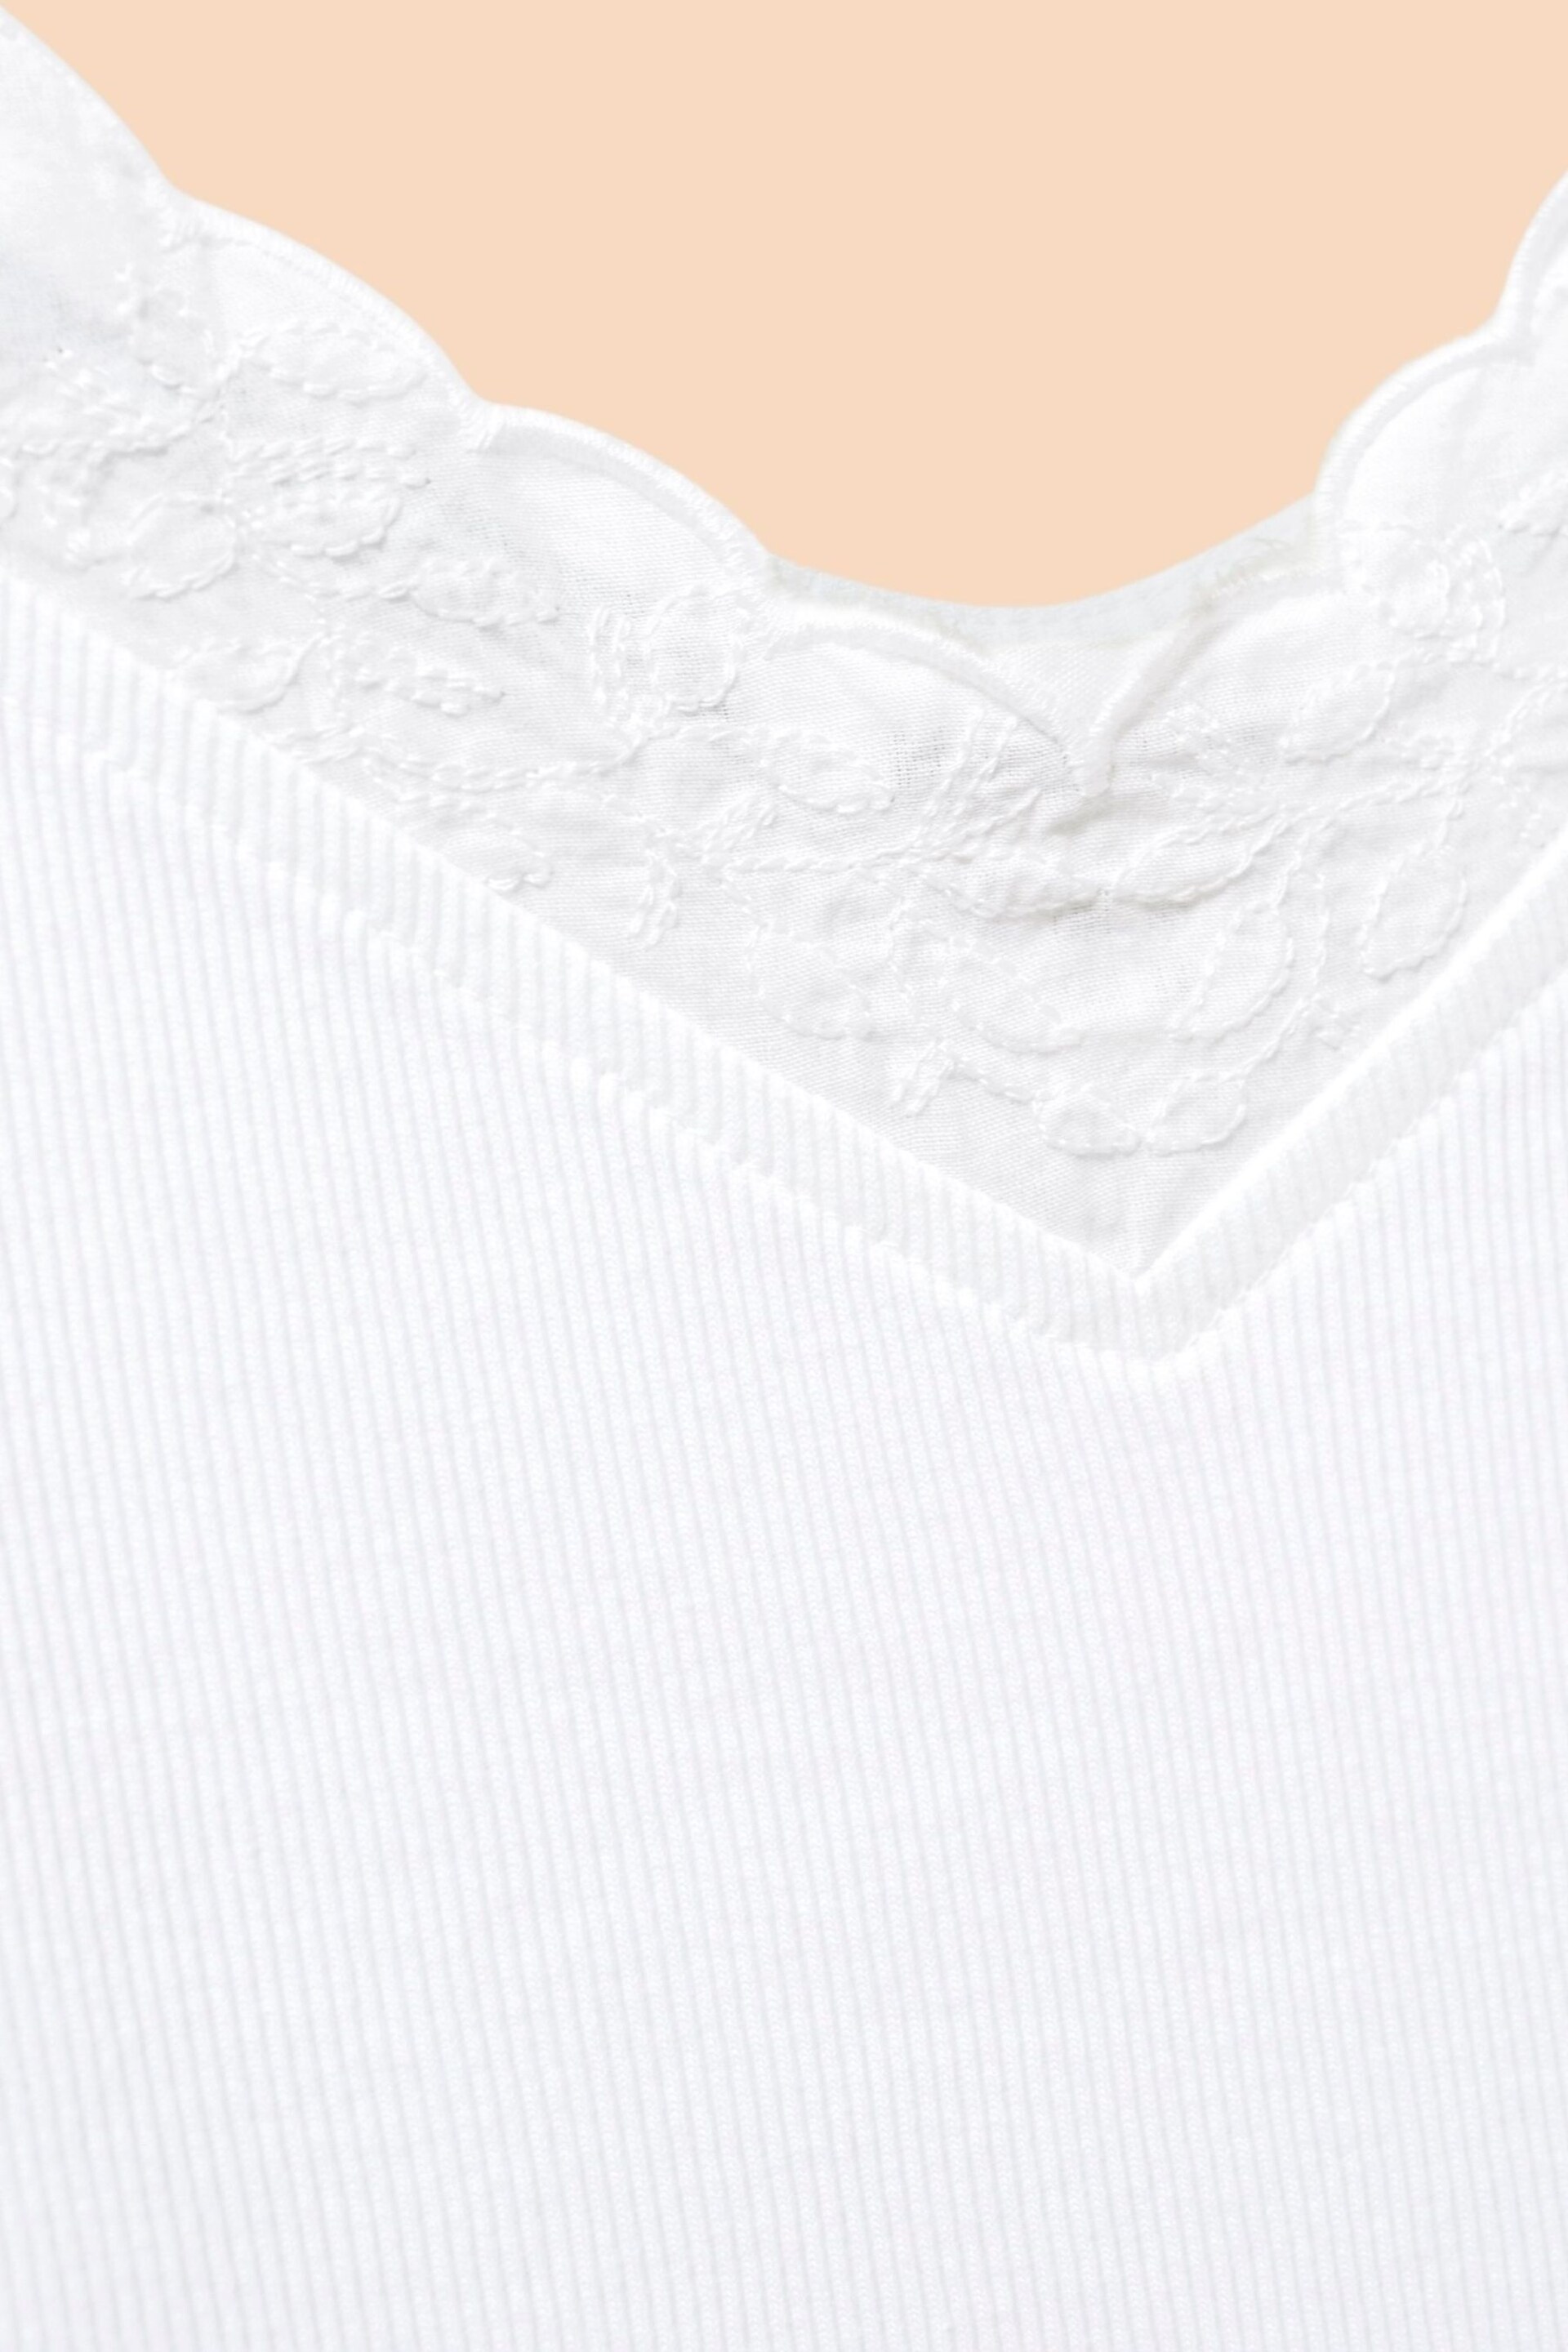 White Stuff White Seabreeze Vest - Image 7 of 7